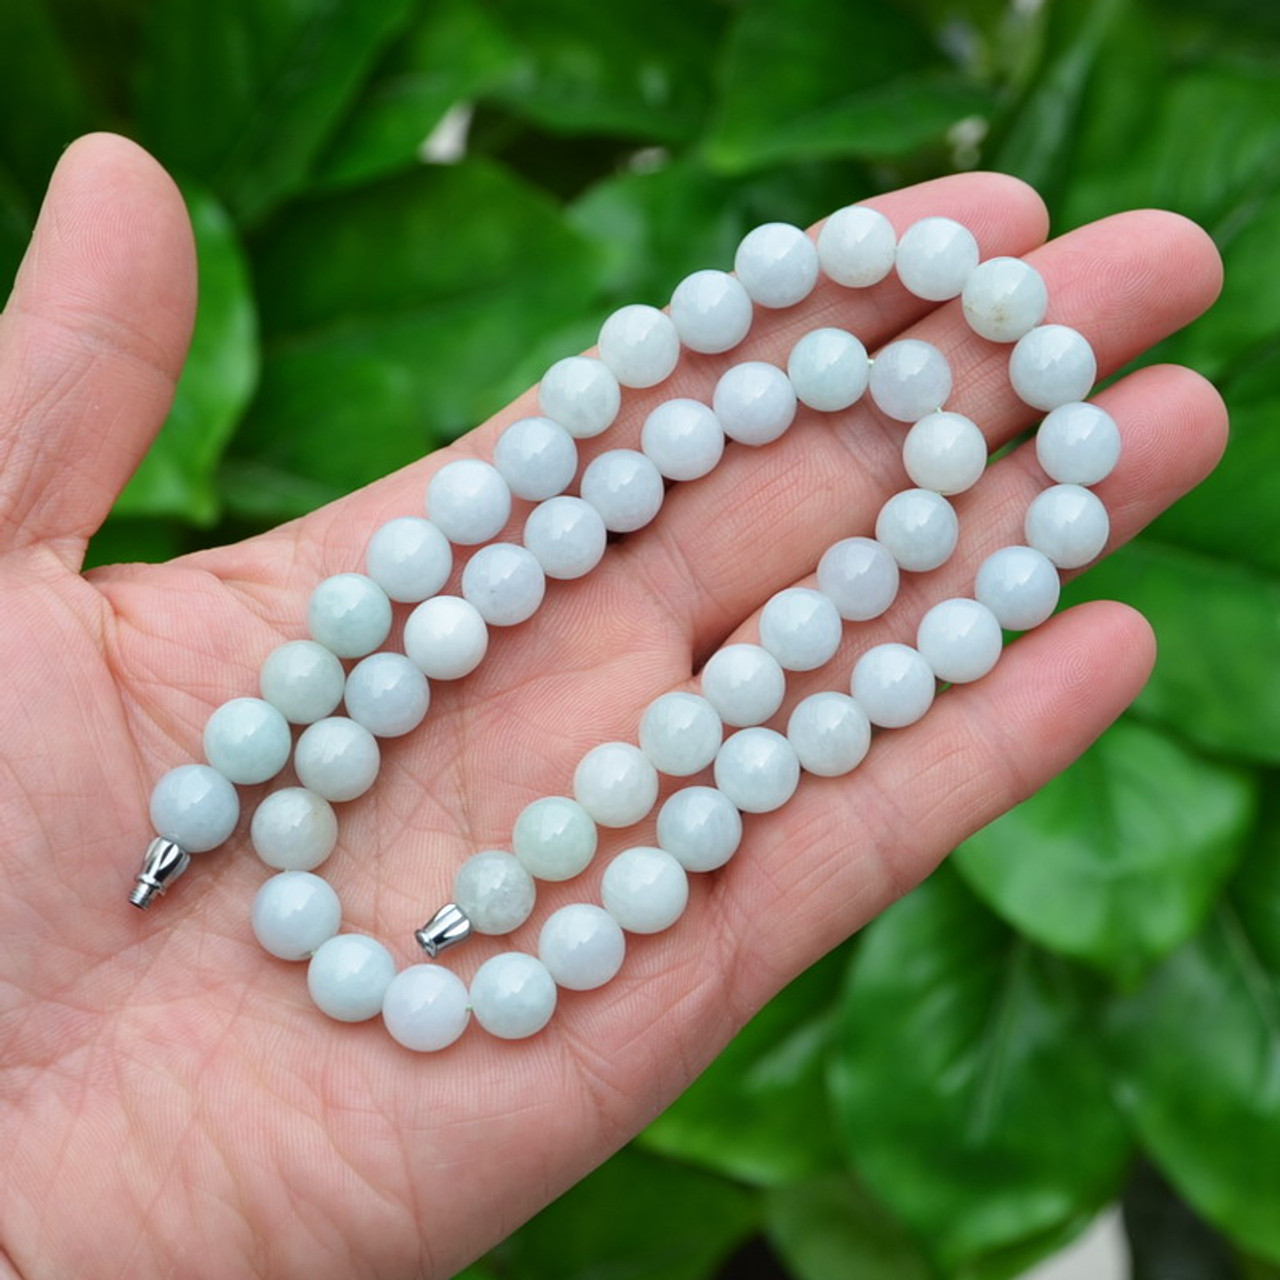 Taiwan Jade Necklace | Jade Necklaces Women | Choker Collares | Natural Jade  | Jewelry - 3 4mm - Aliexpress